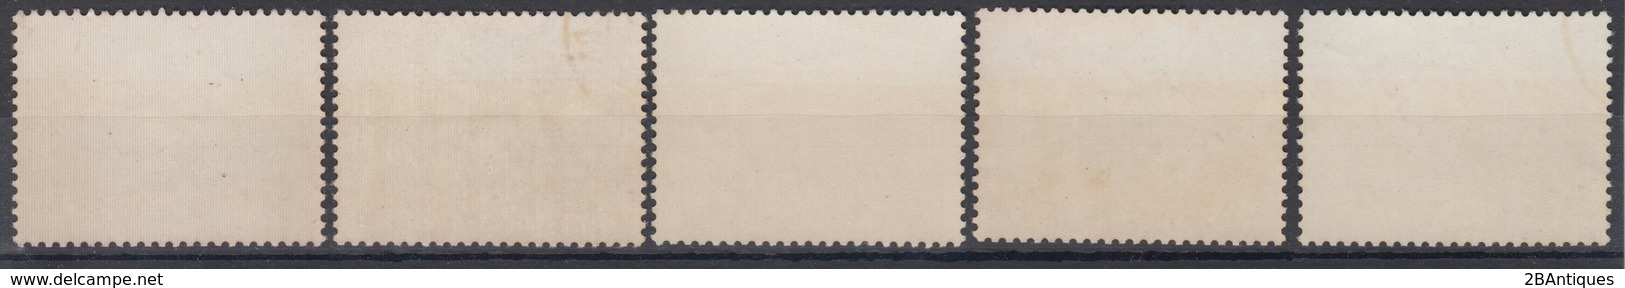 PR CHINA 1960 - Pig-breeding CTO OG XF - Used Stamps